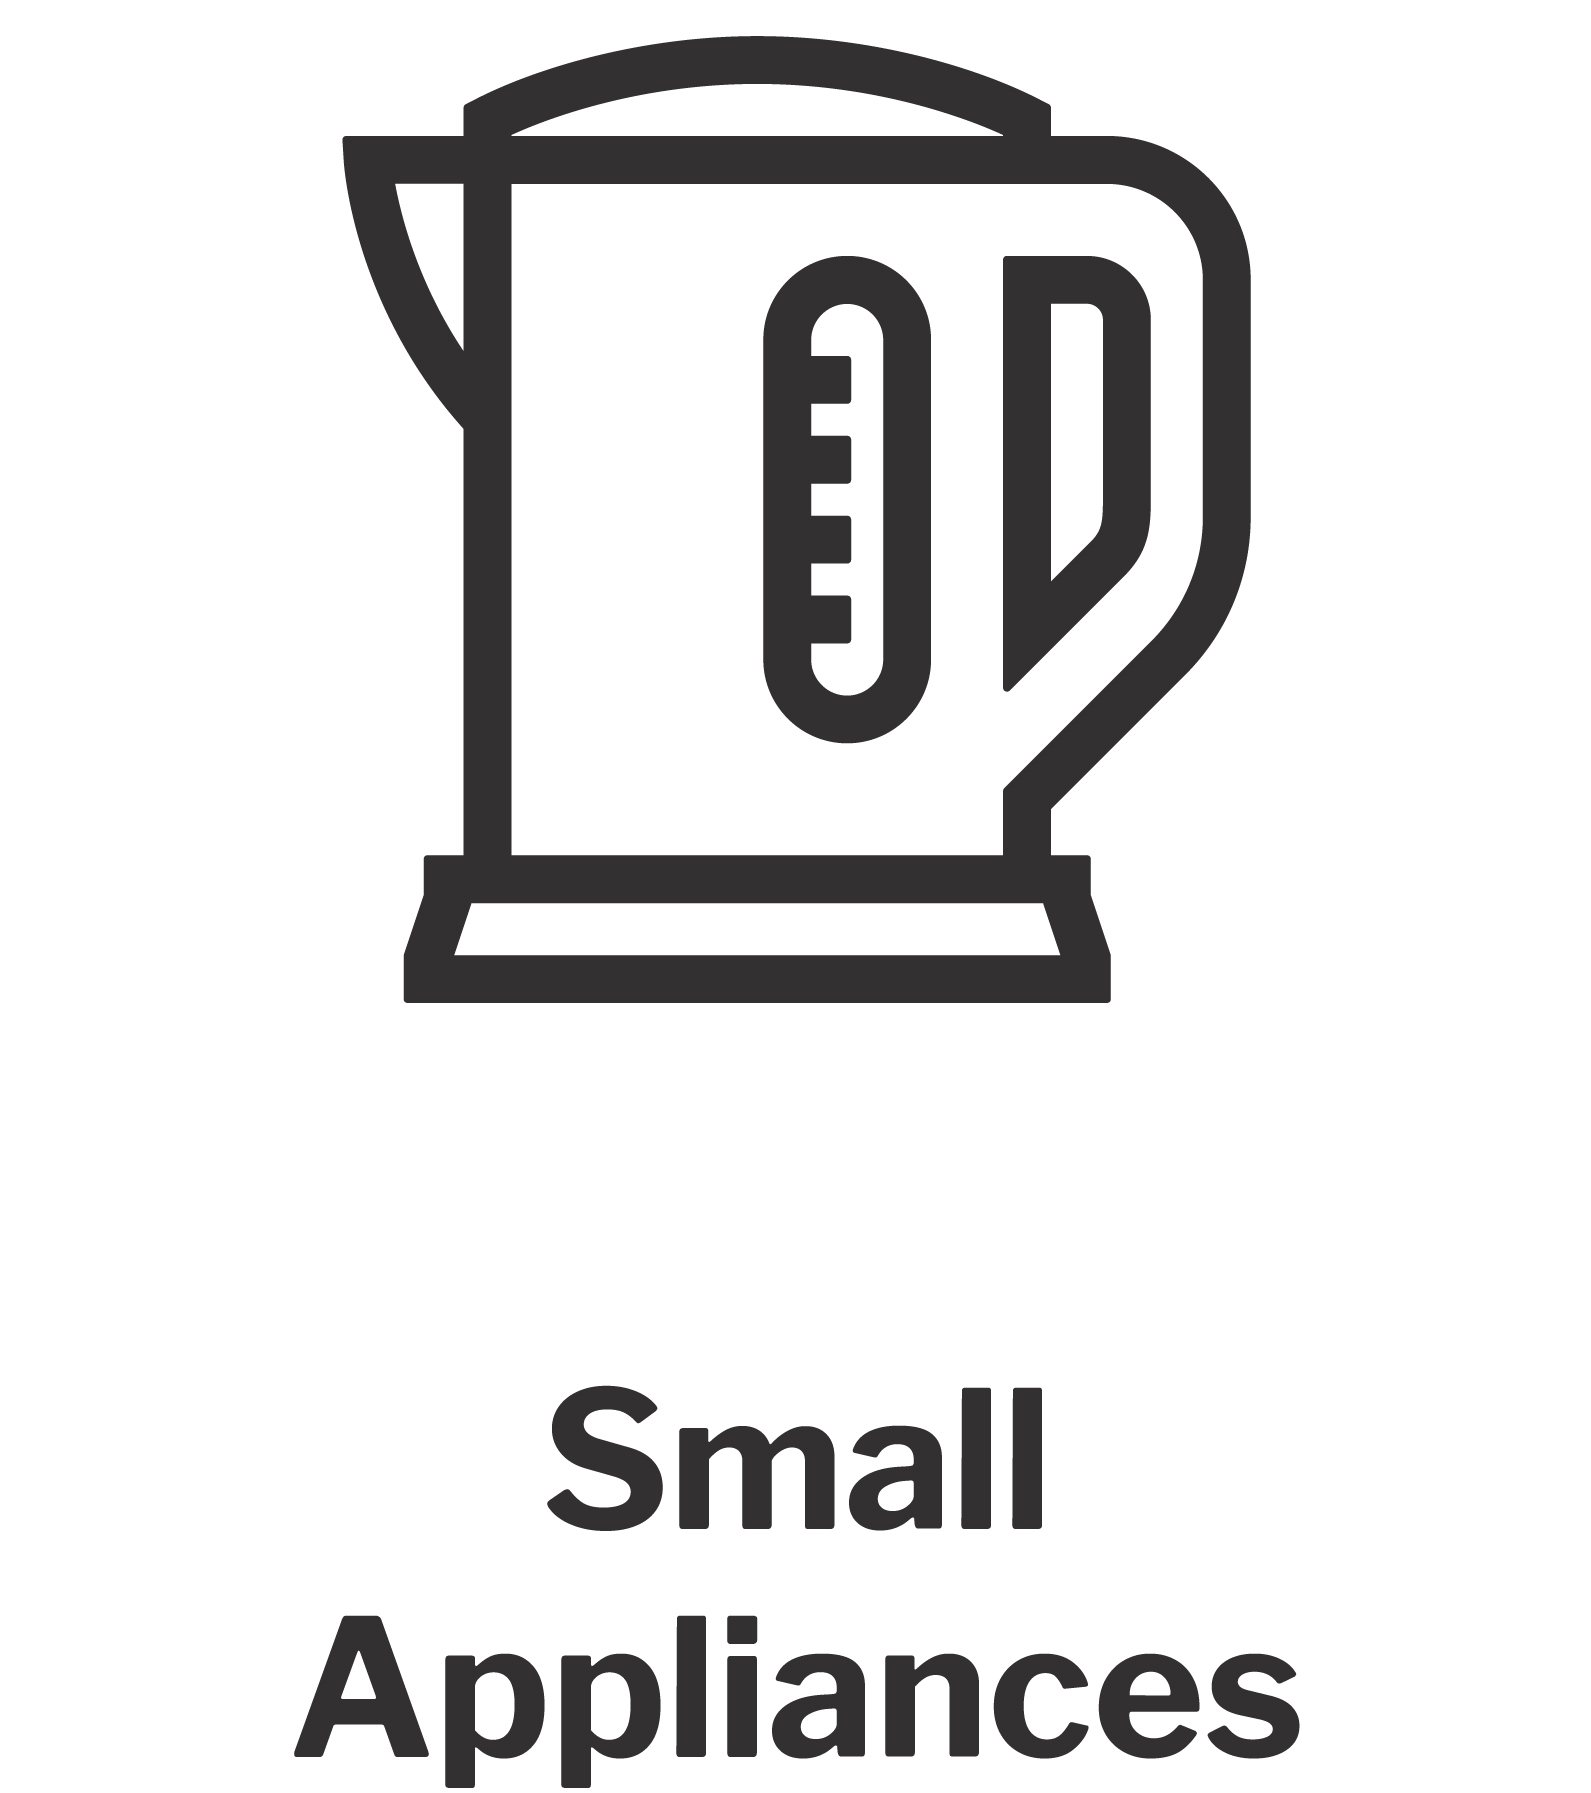 Small Appliances, Geysers & Urns